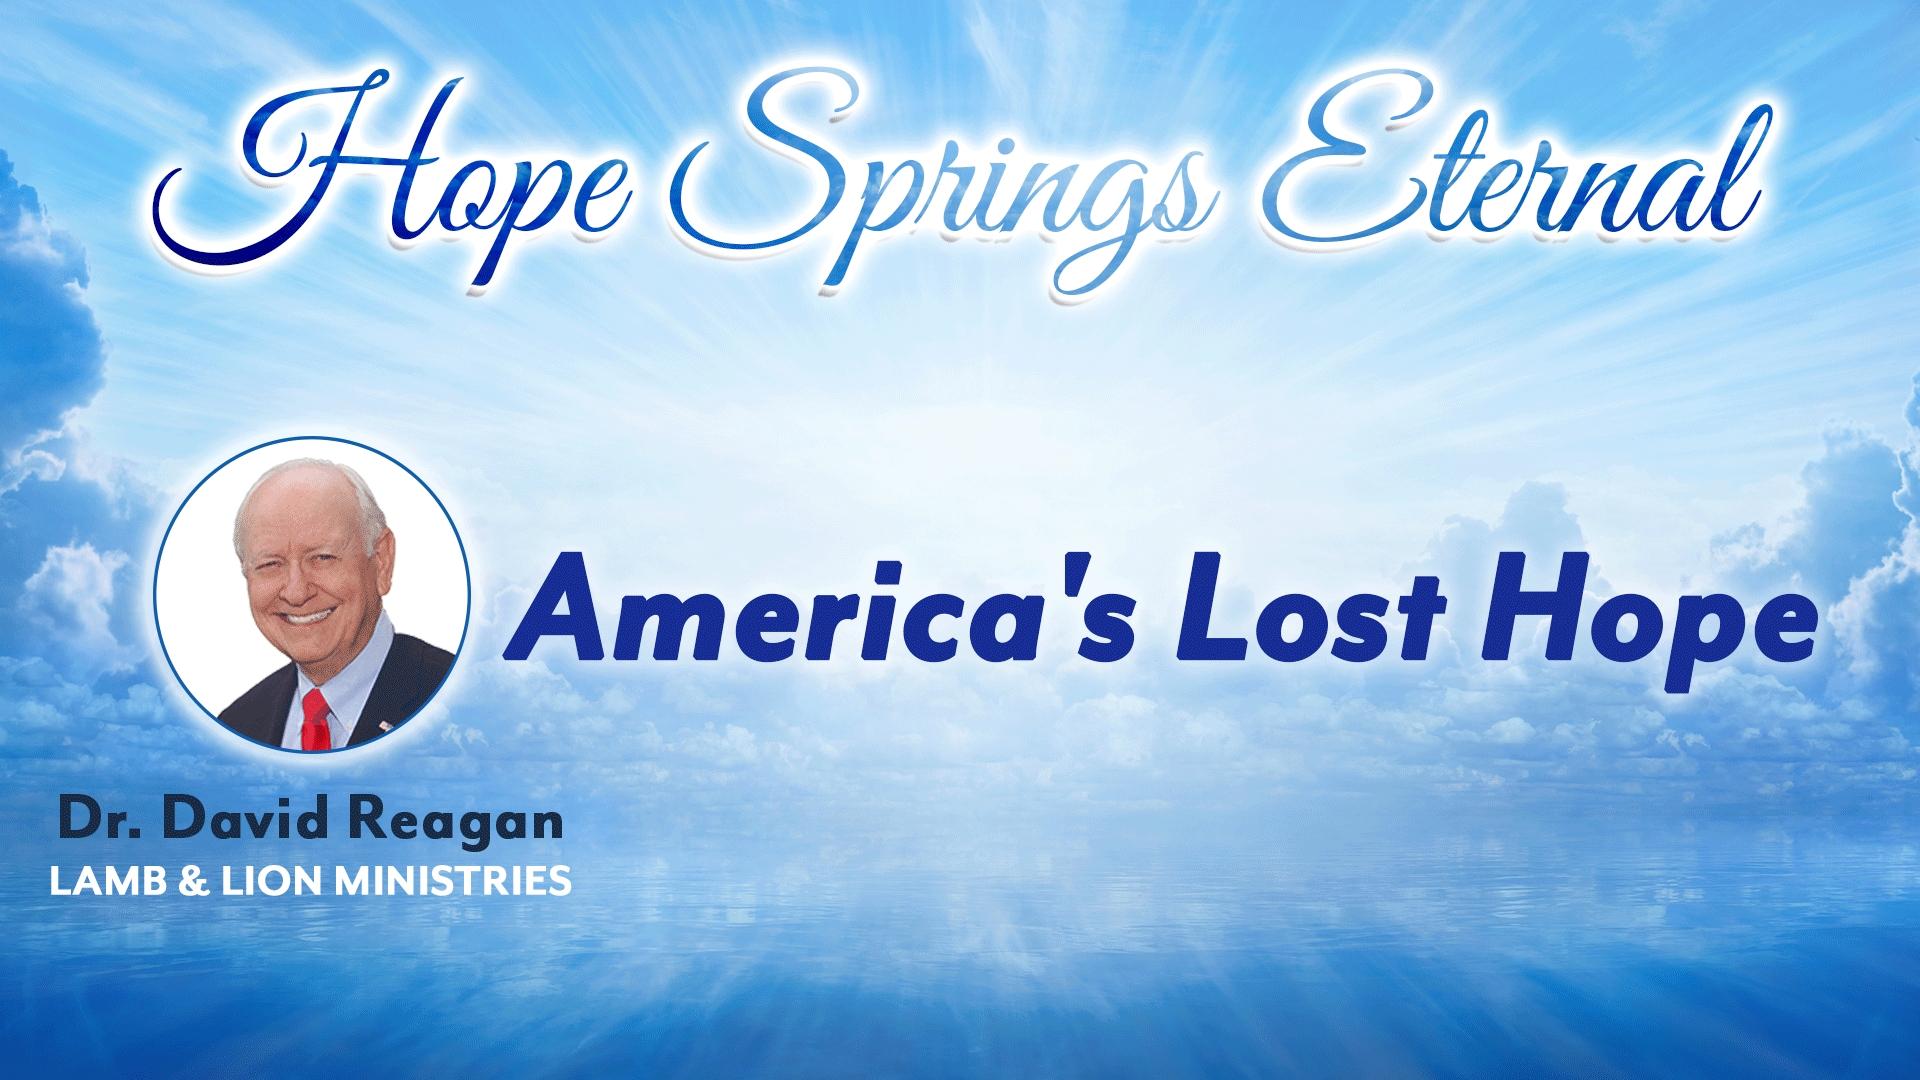 America's Lost Hope